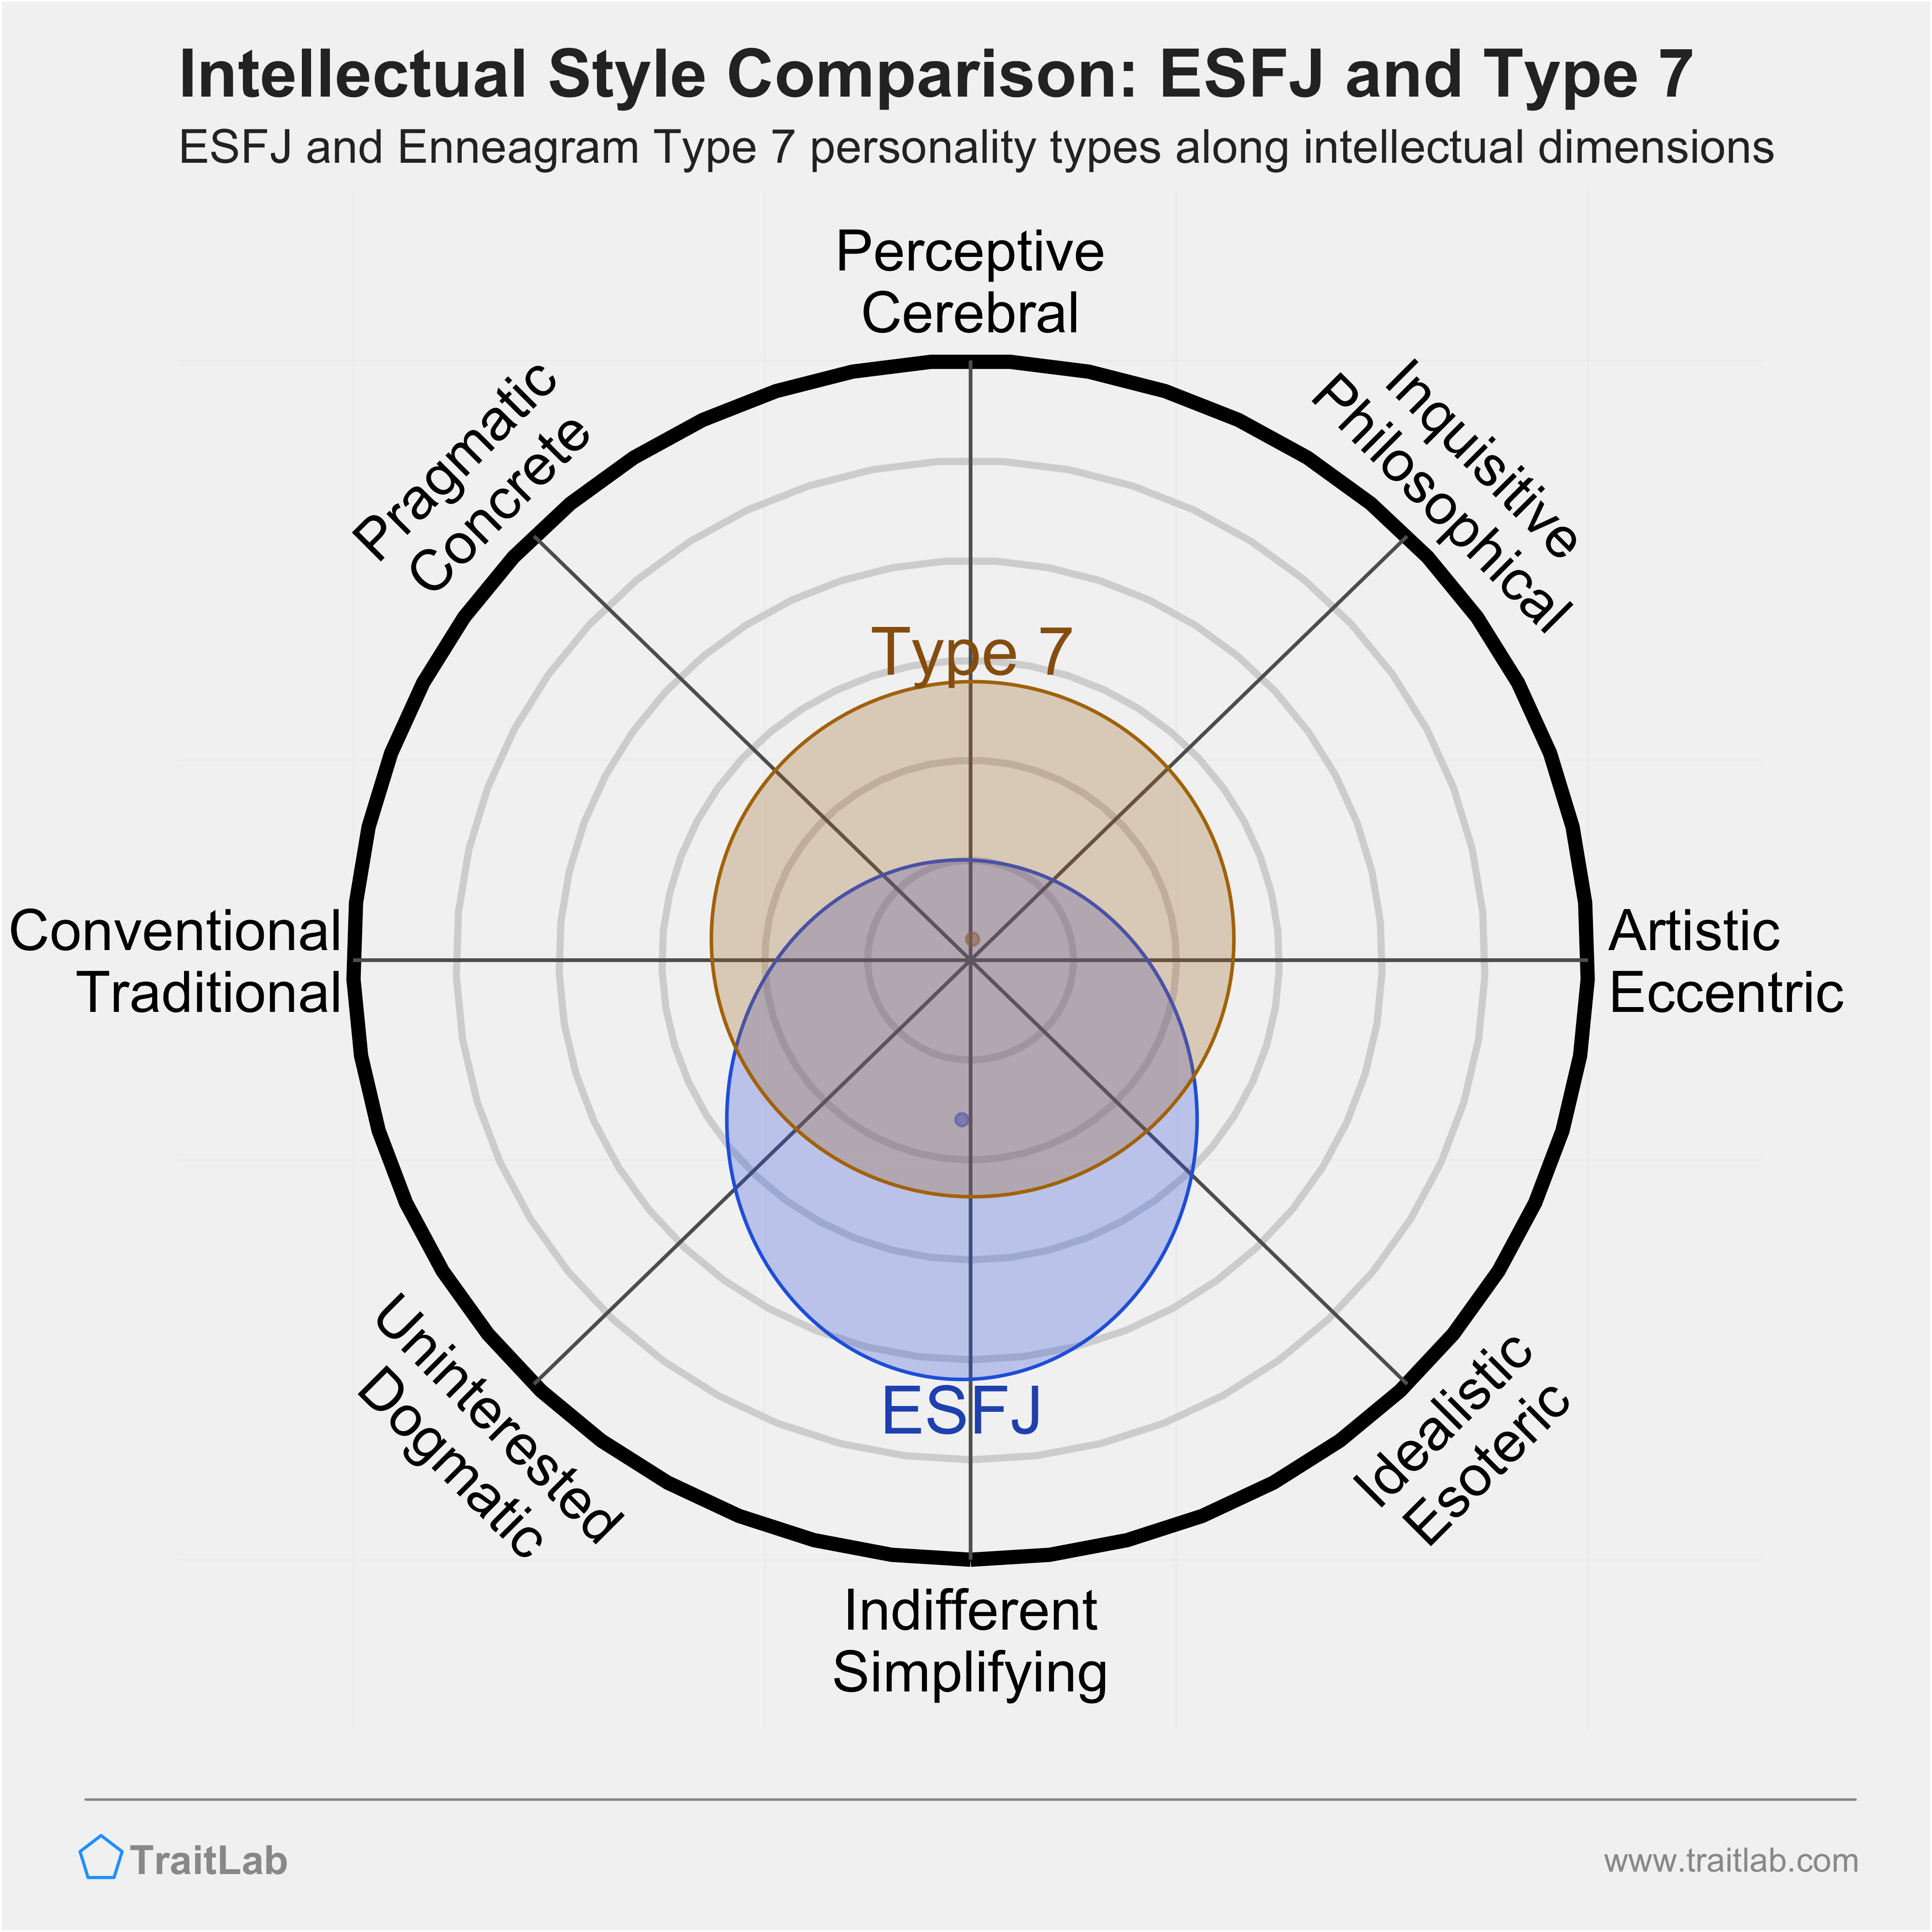 ESFJ and Type 7 comparison across intellectual dimensions